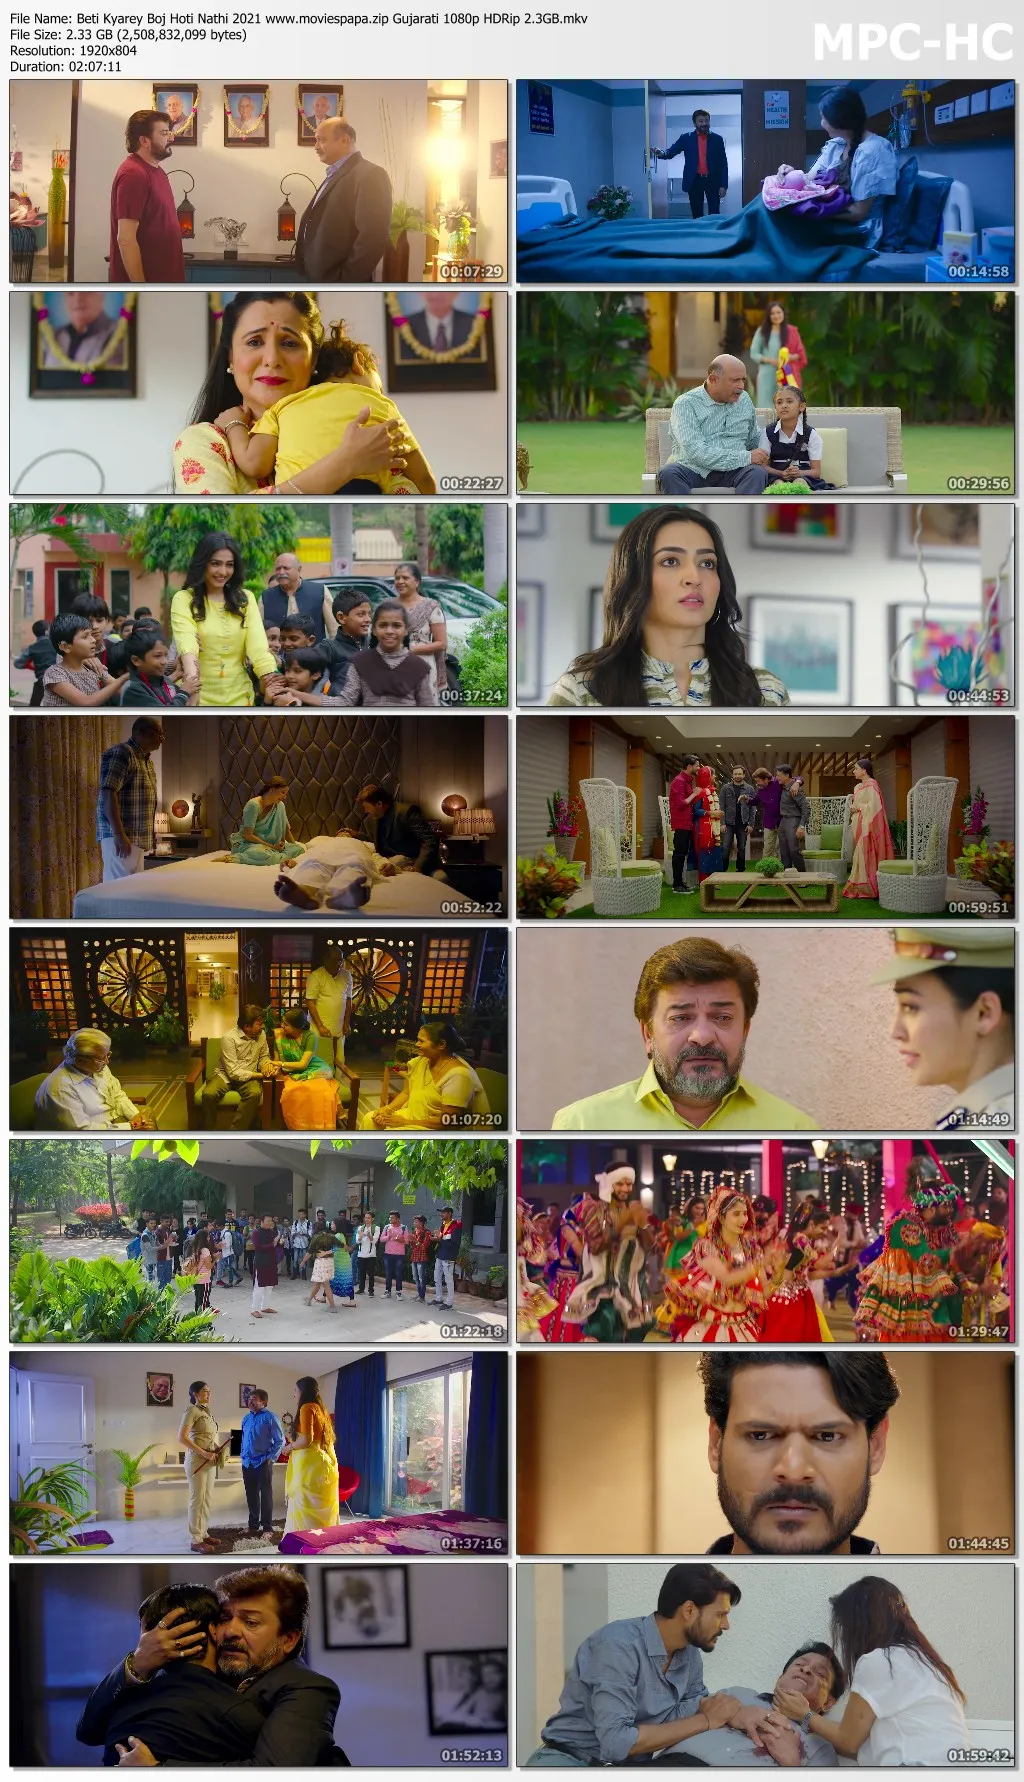 Beti Kyarey Boj Hoti Nathi 2021 Gujarati 1080p | 720p | 480p HDRip Download